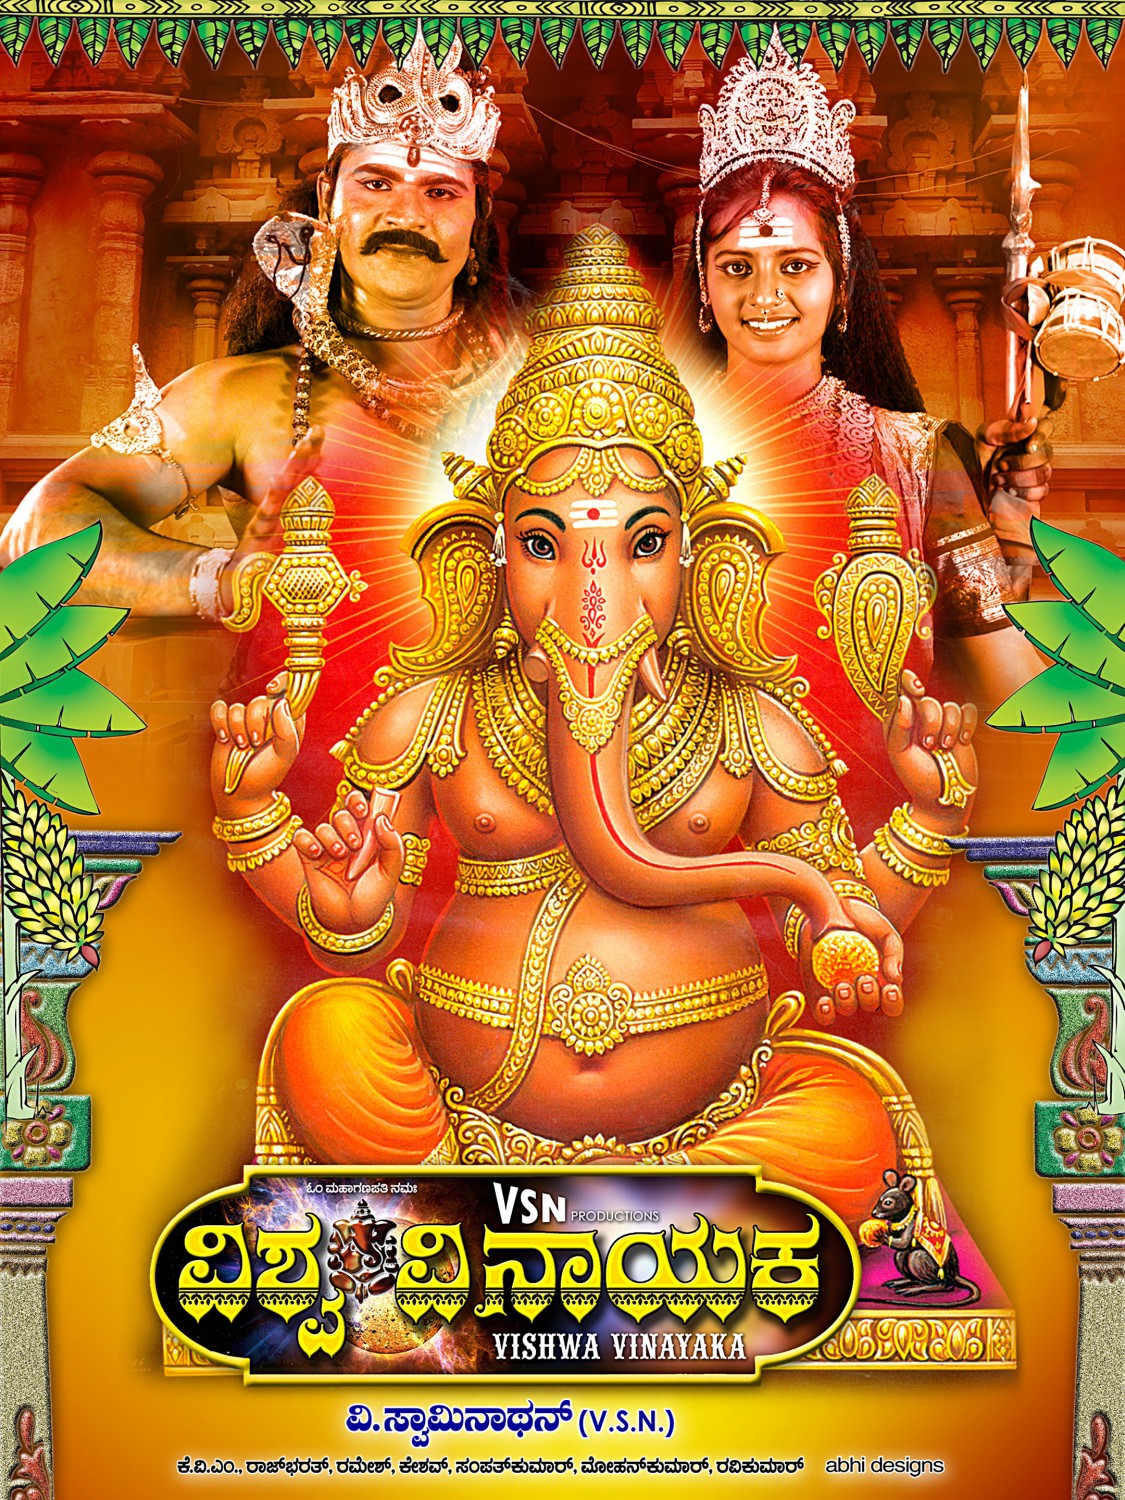 Extra Large Movie Poster Image for Vishwa Vinayaka (#5 of 7)